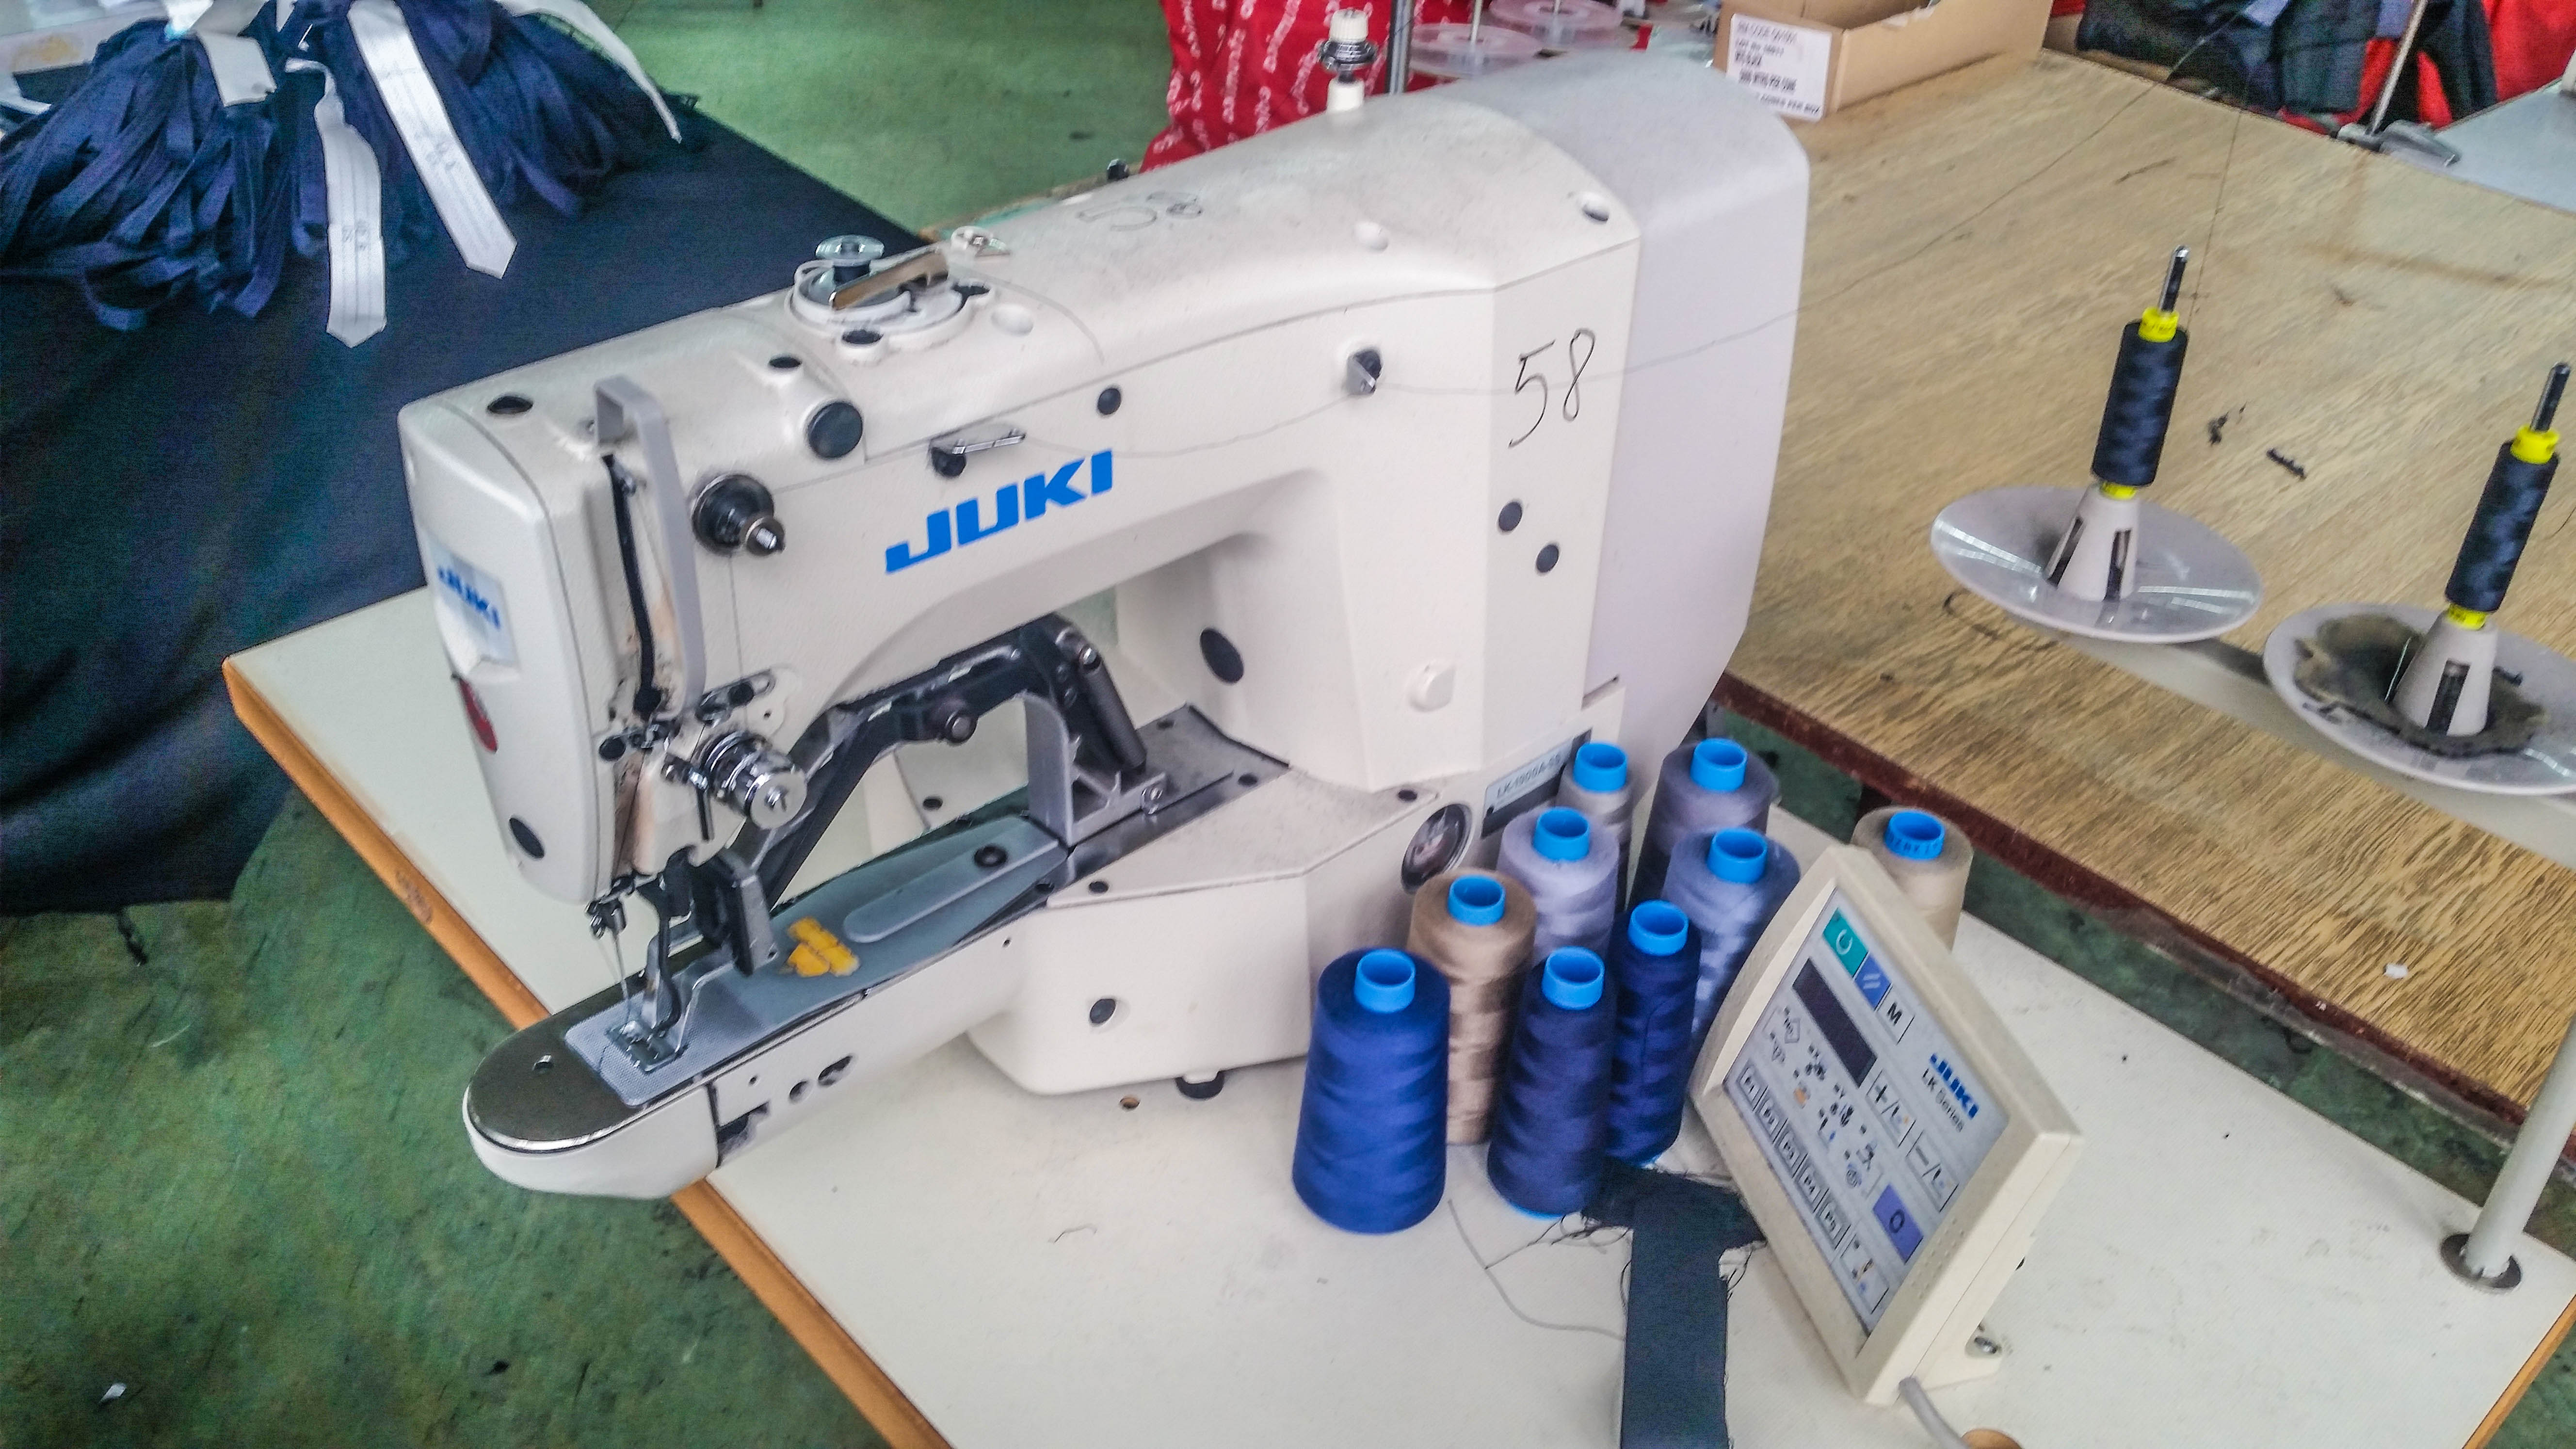 File:Sewing machine Juki.jpg - Wikimedia Commons